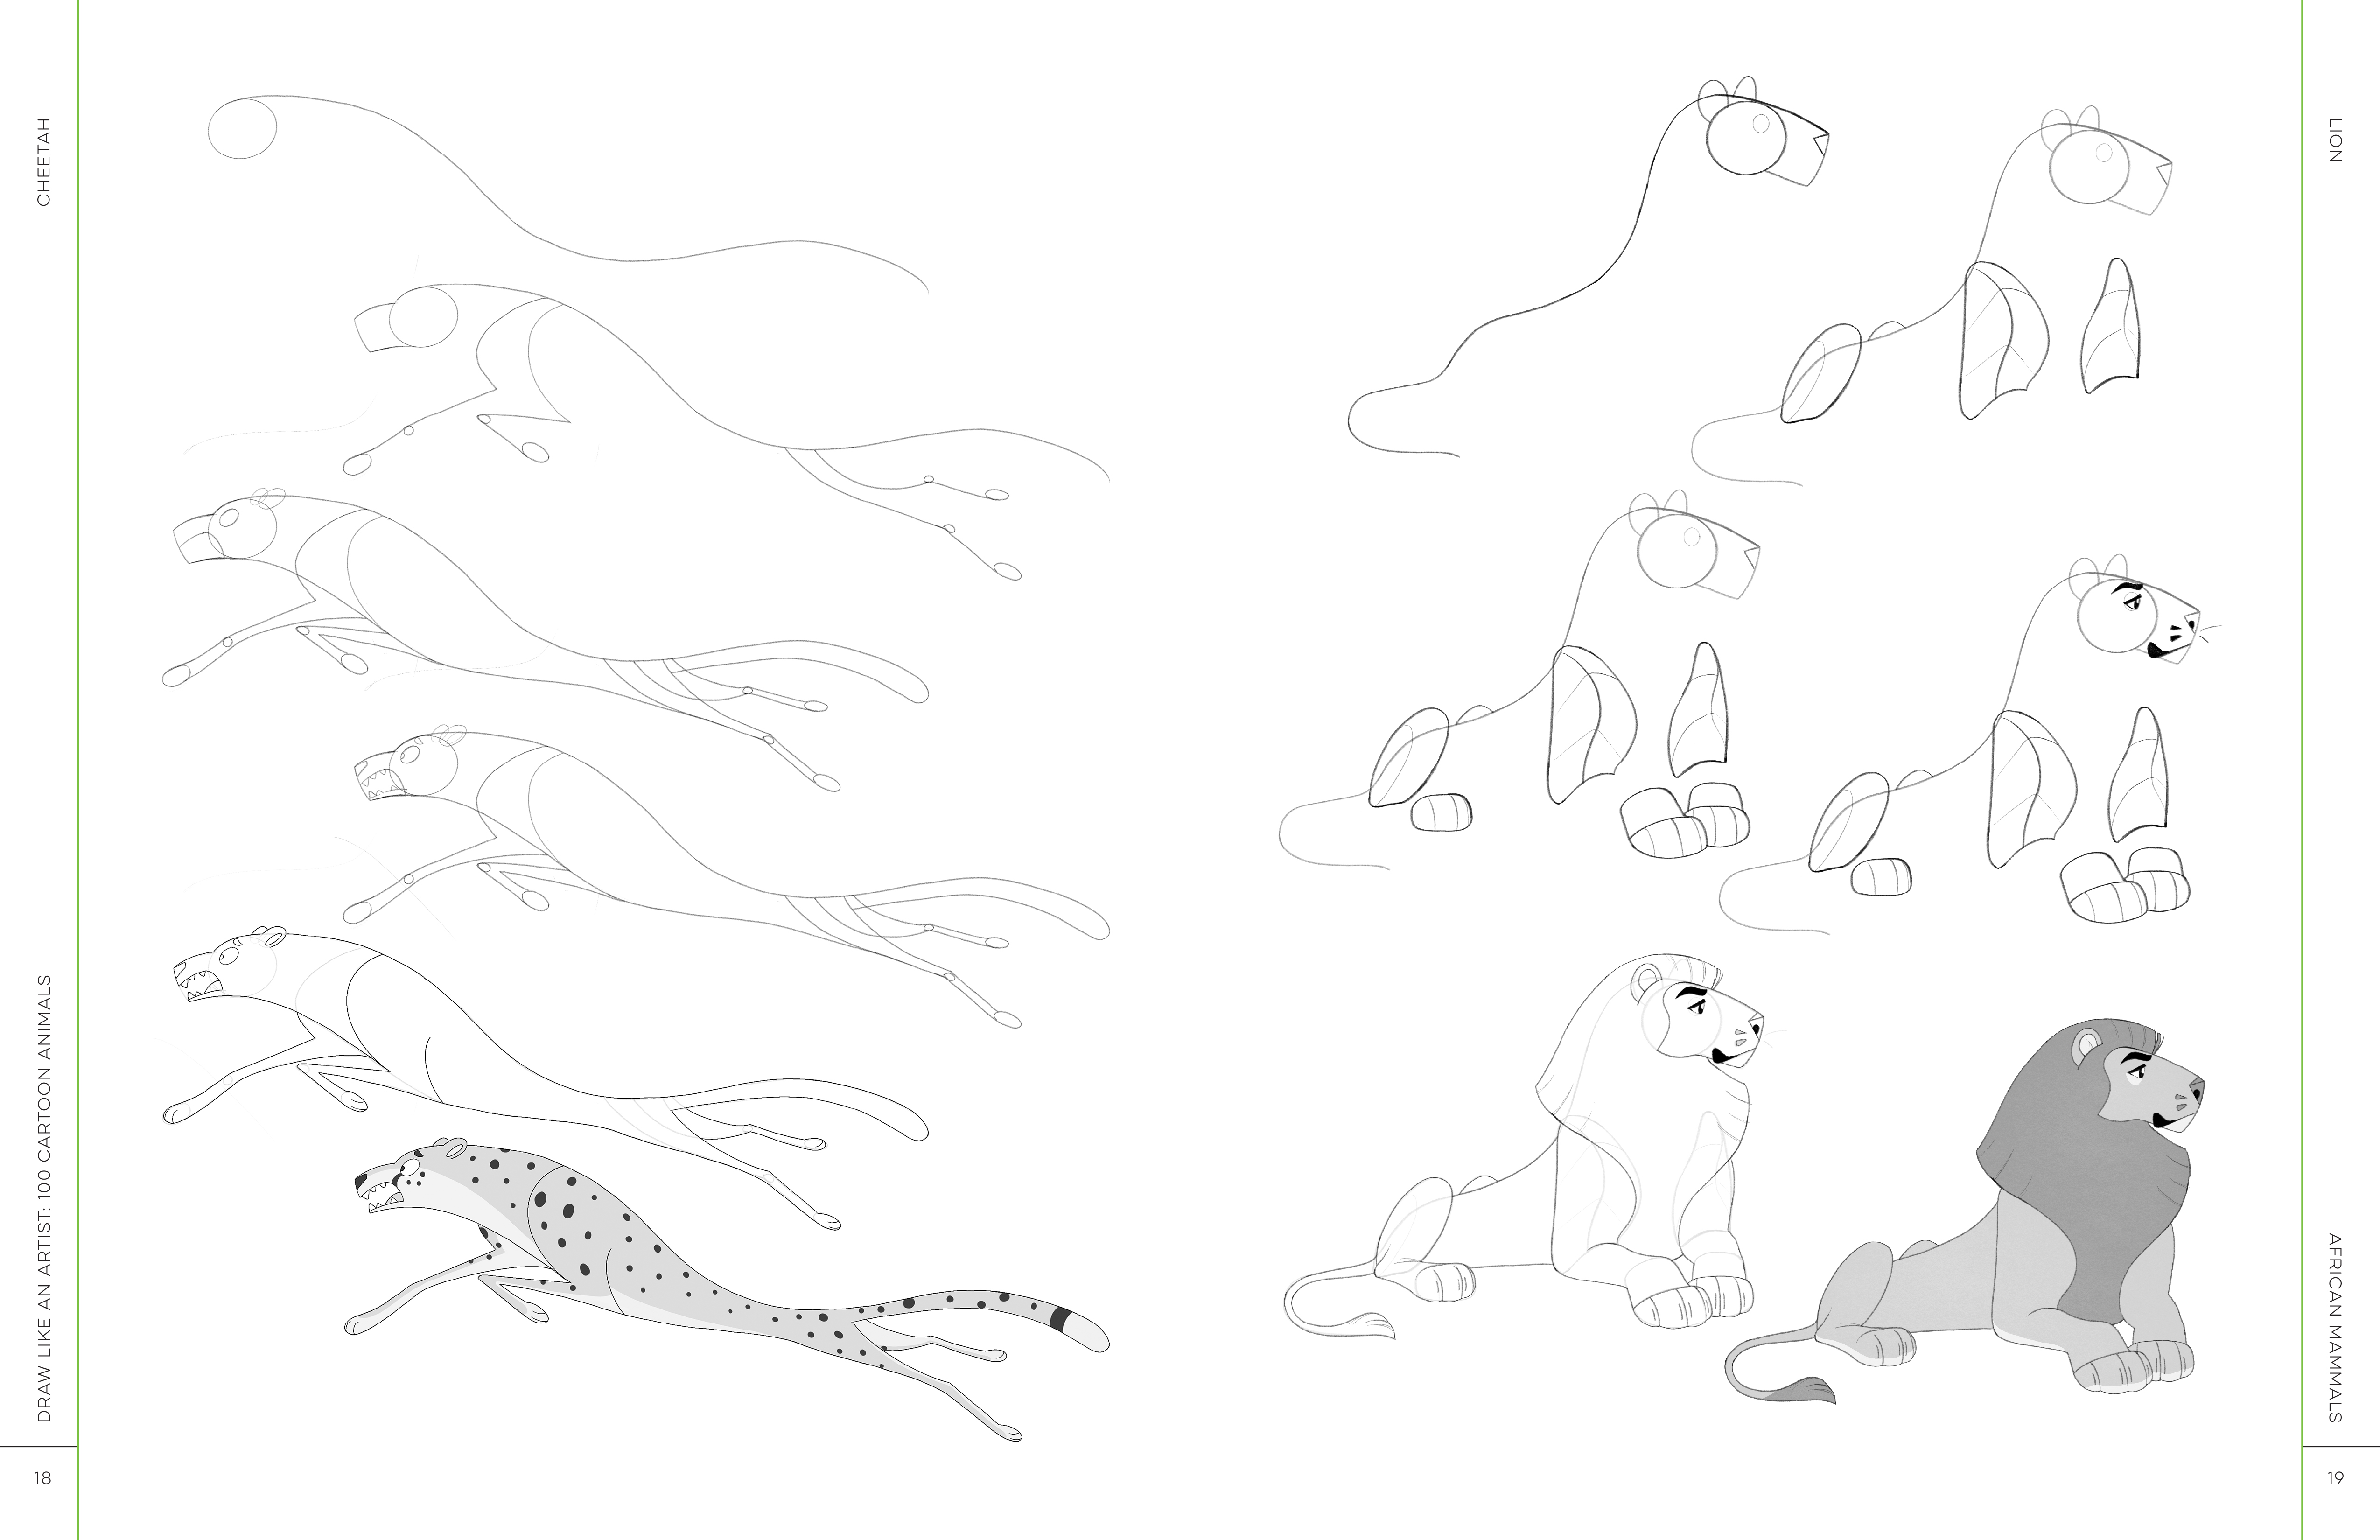 Draw Like an Artist: 100 Cartoon Animals